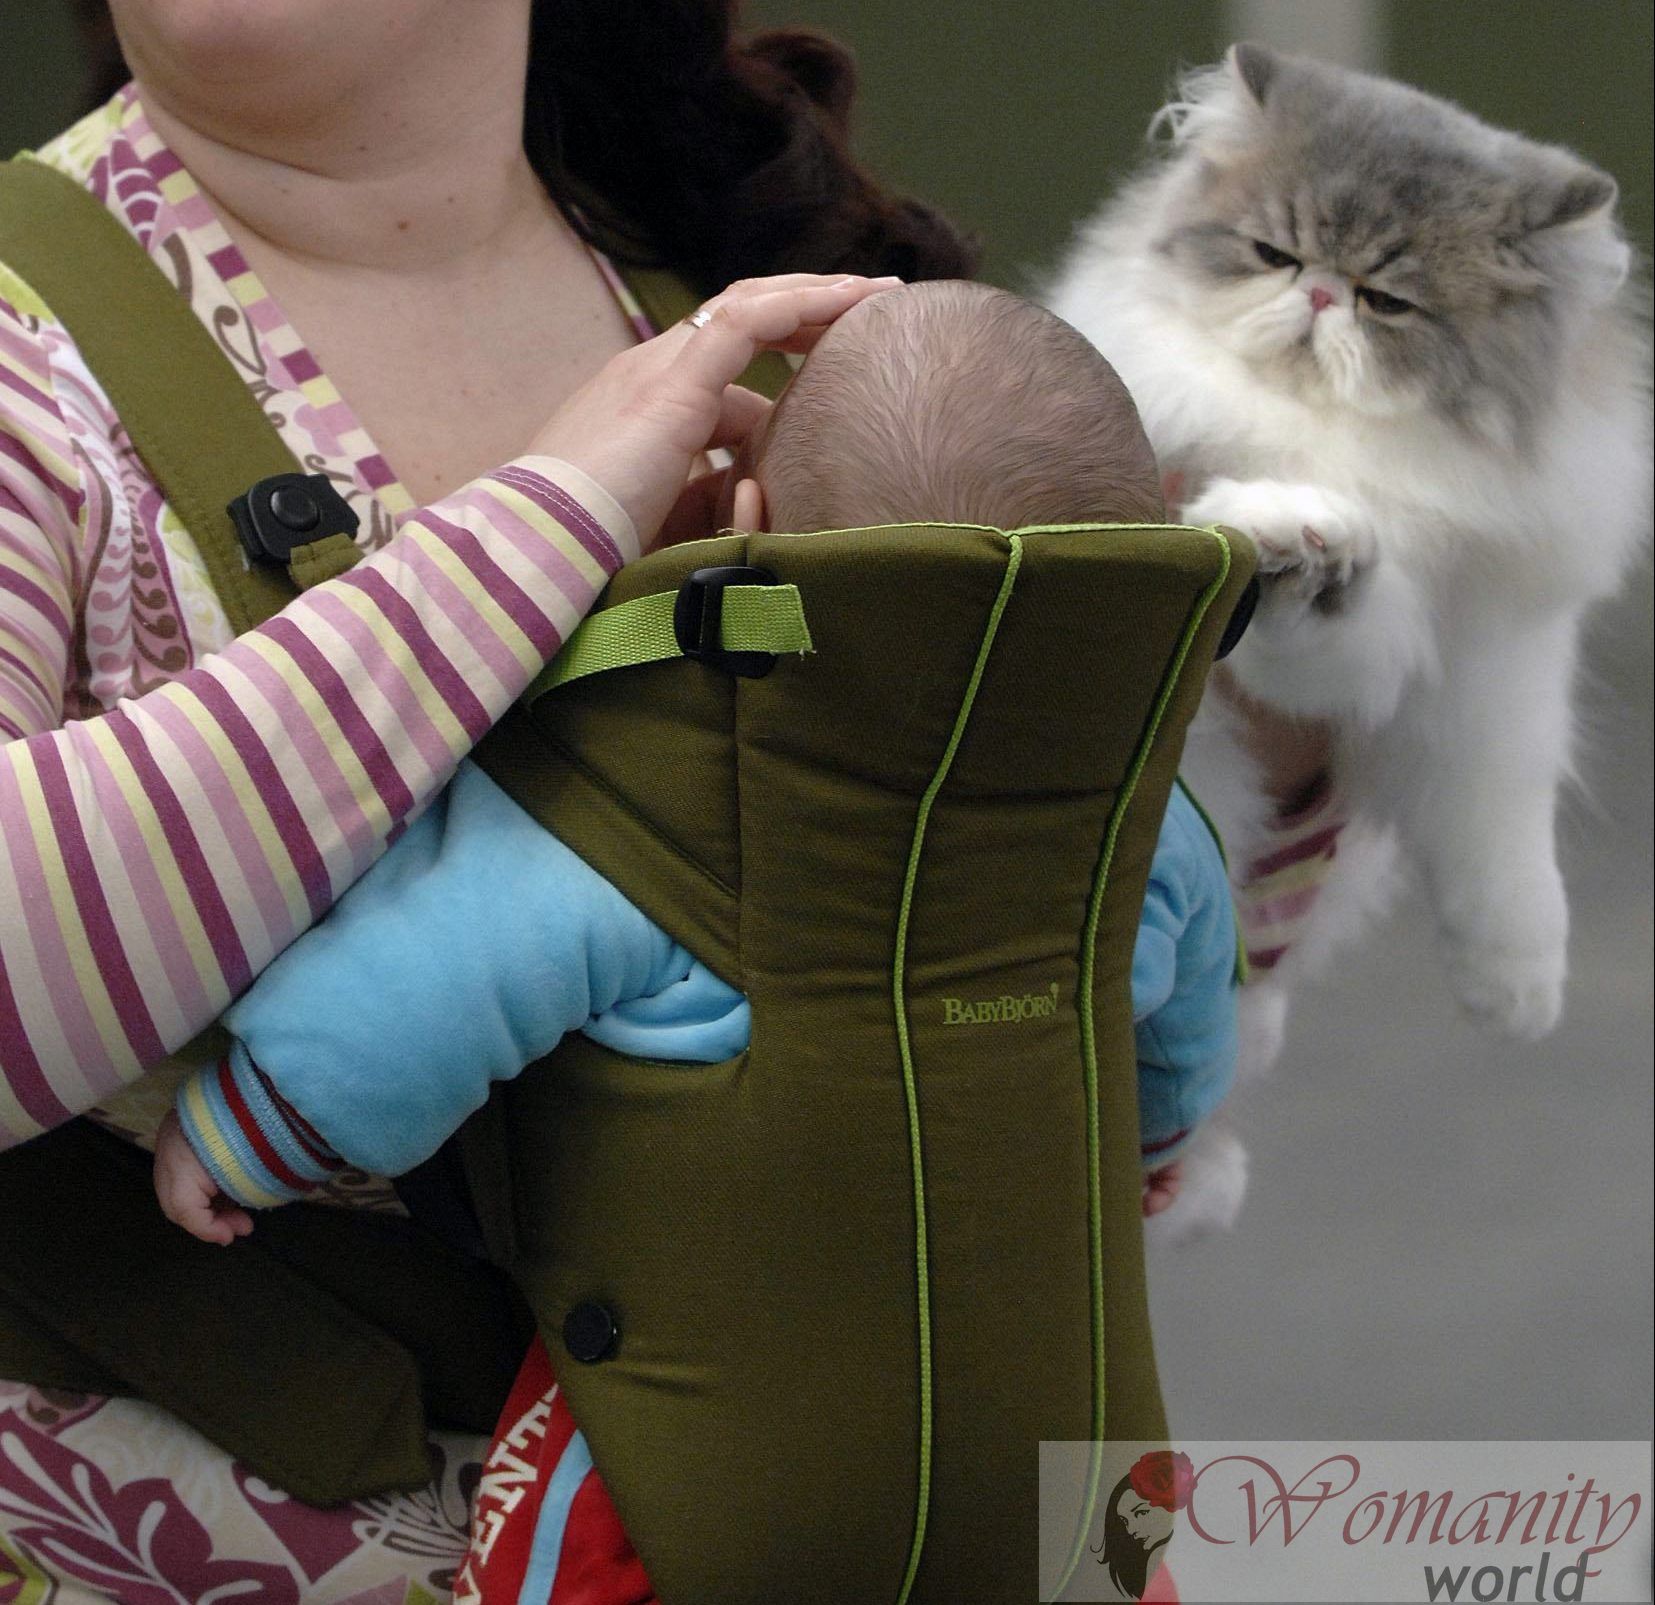 Cri du chat-syndroom: de karakteristieke huilende baby